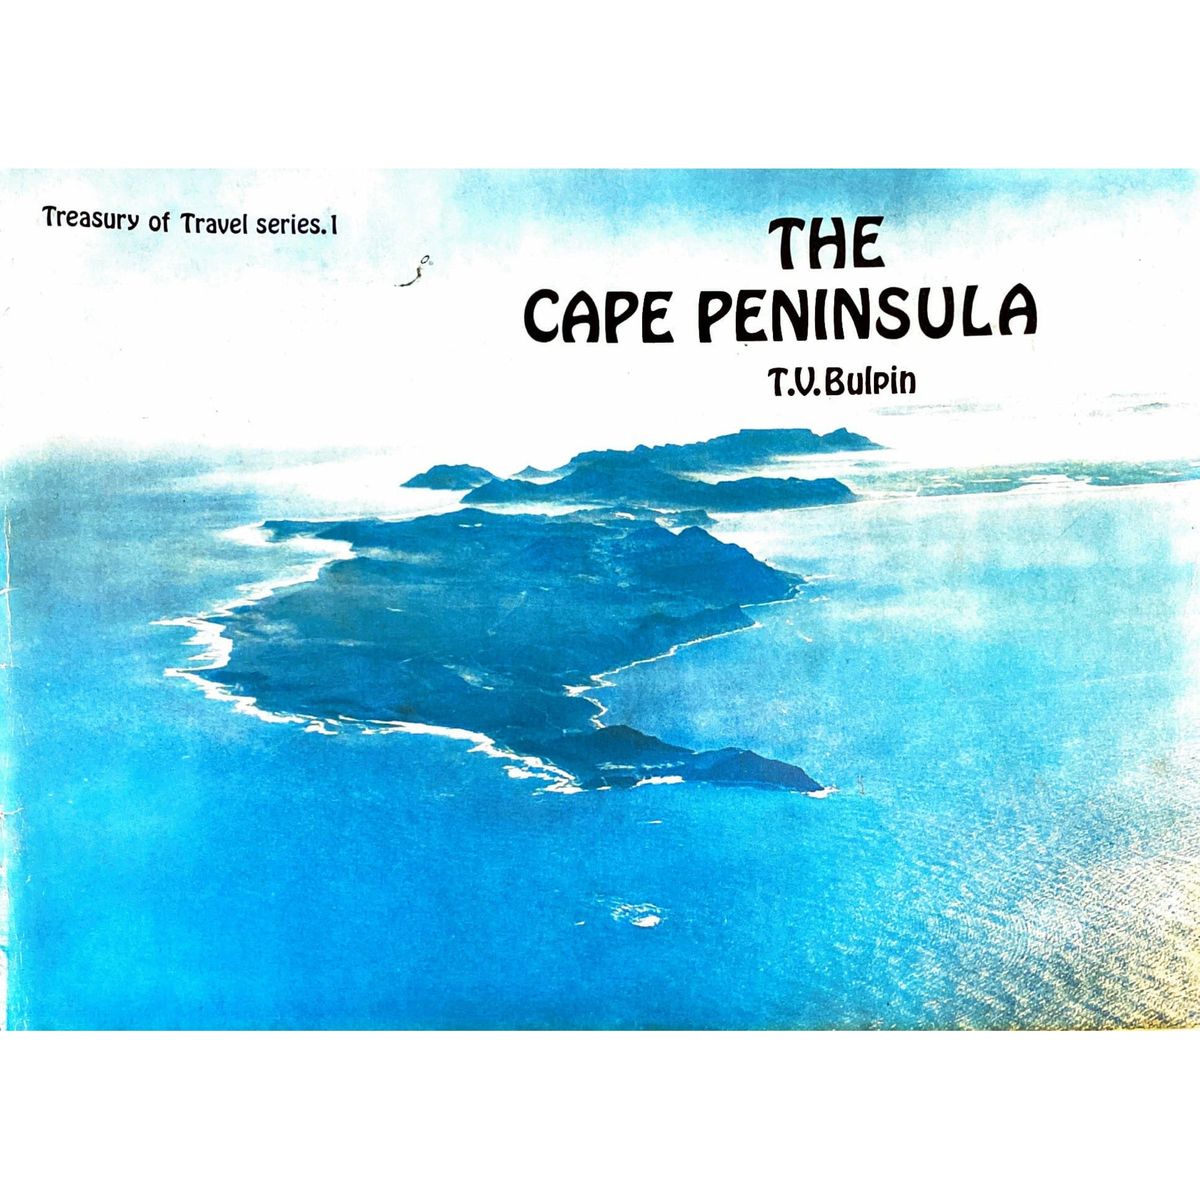 ISBN: 9780947047023 / 0947047026 - The Cape Peninsula: Treasury of Travel Series by T.V. Bulpin [1979]